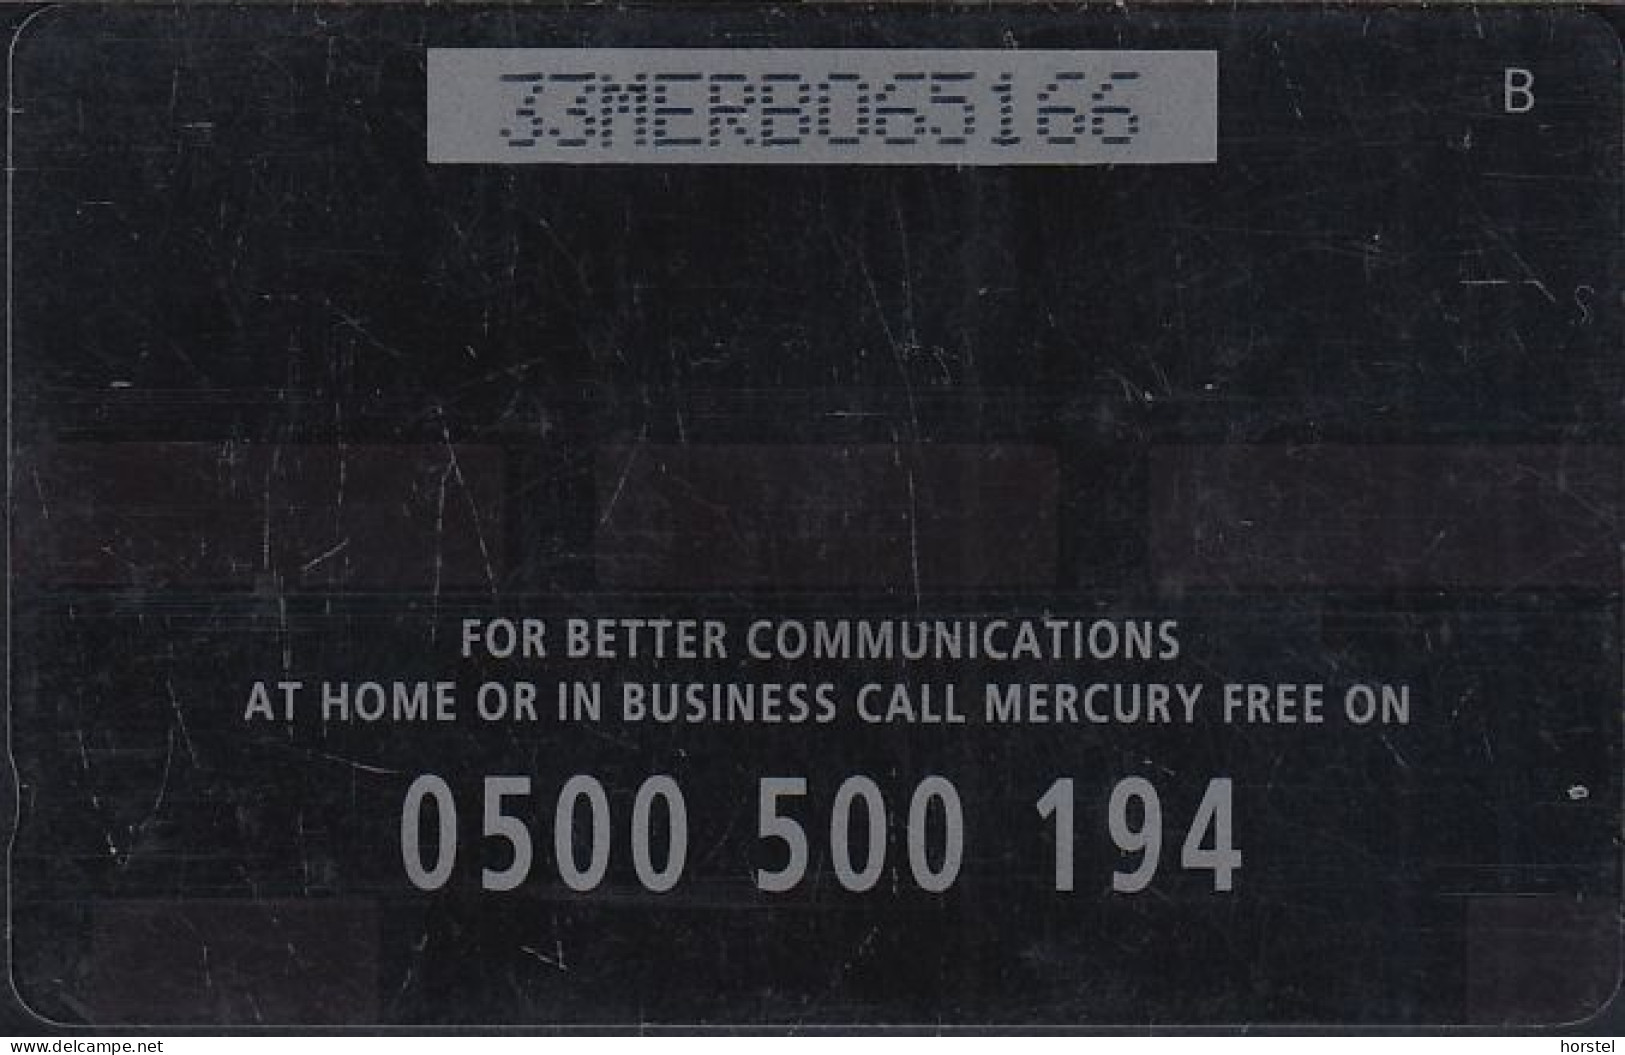 Mercury - MER412 Harry Enfield "Simple" (Reprint) - Phone - £2 - 33MERB - Mercury Communications & Paytelco